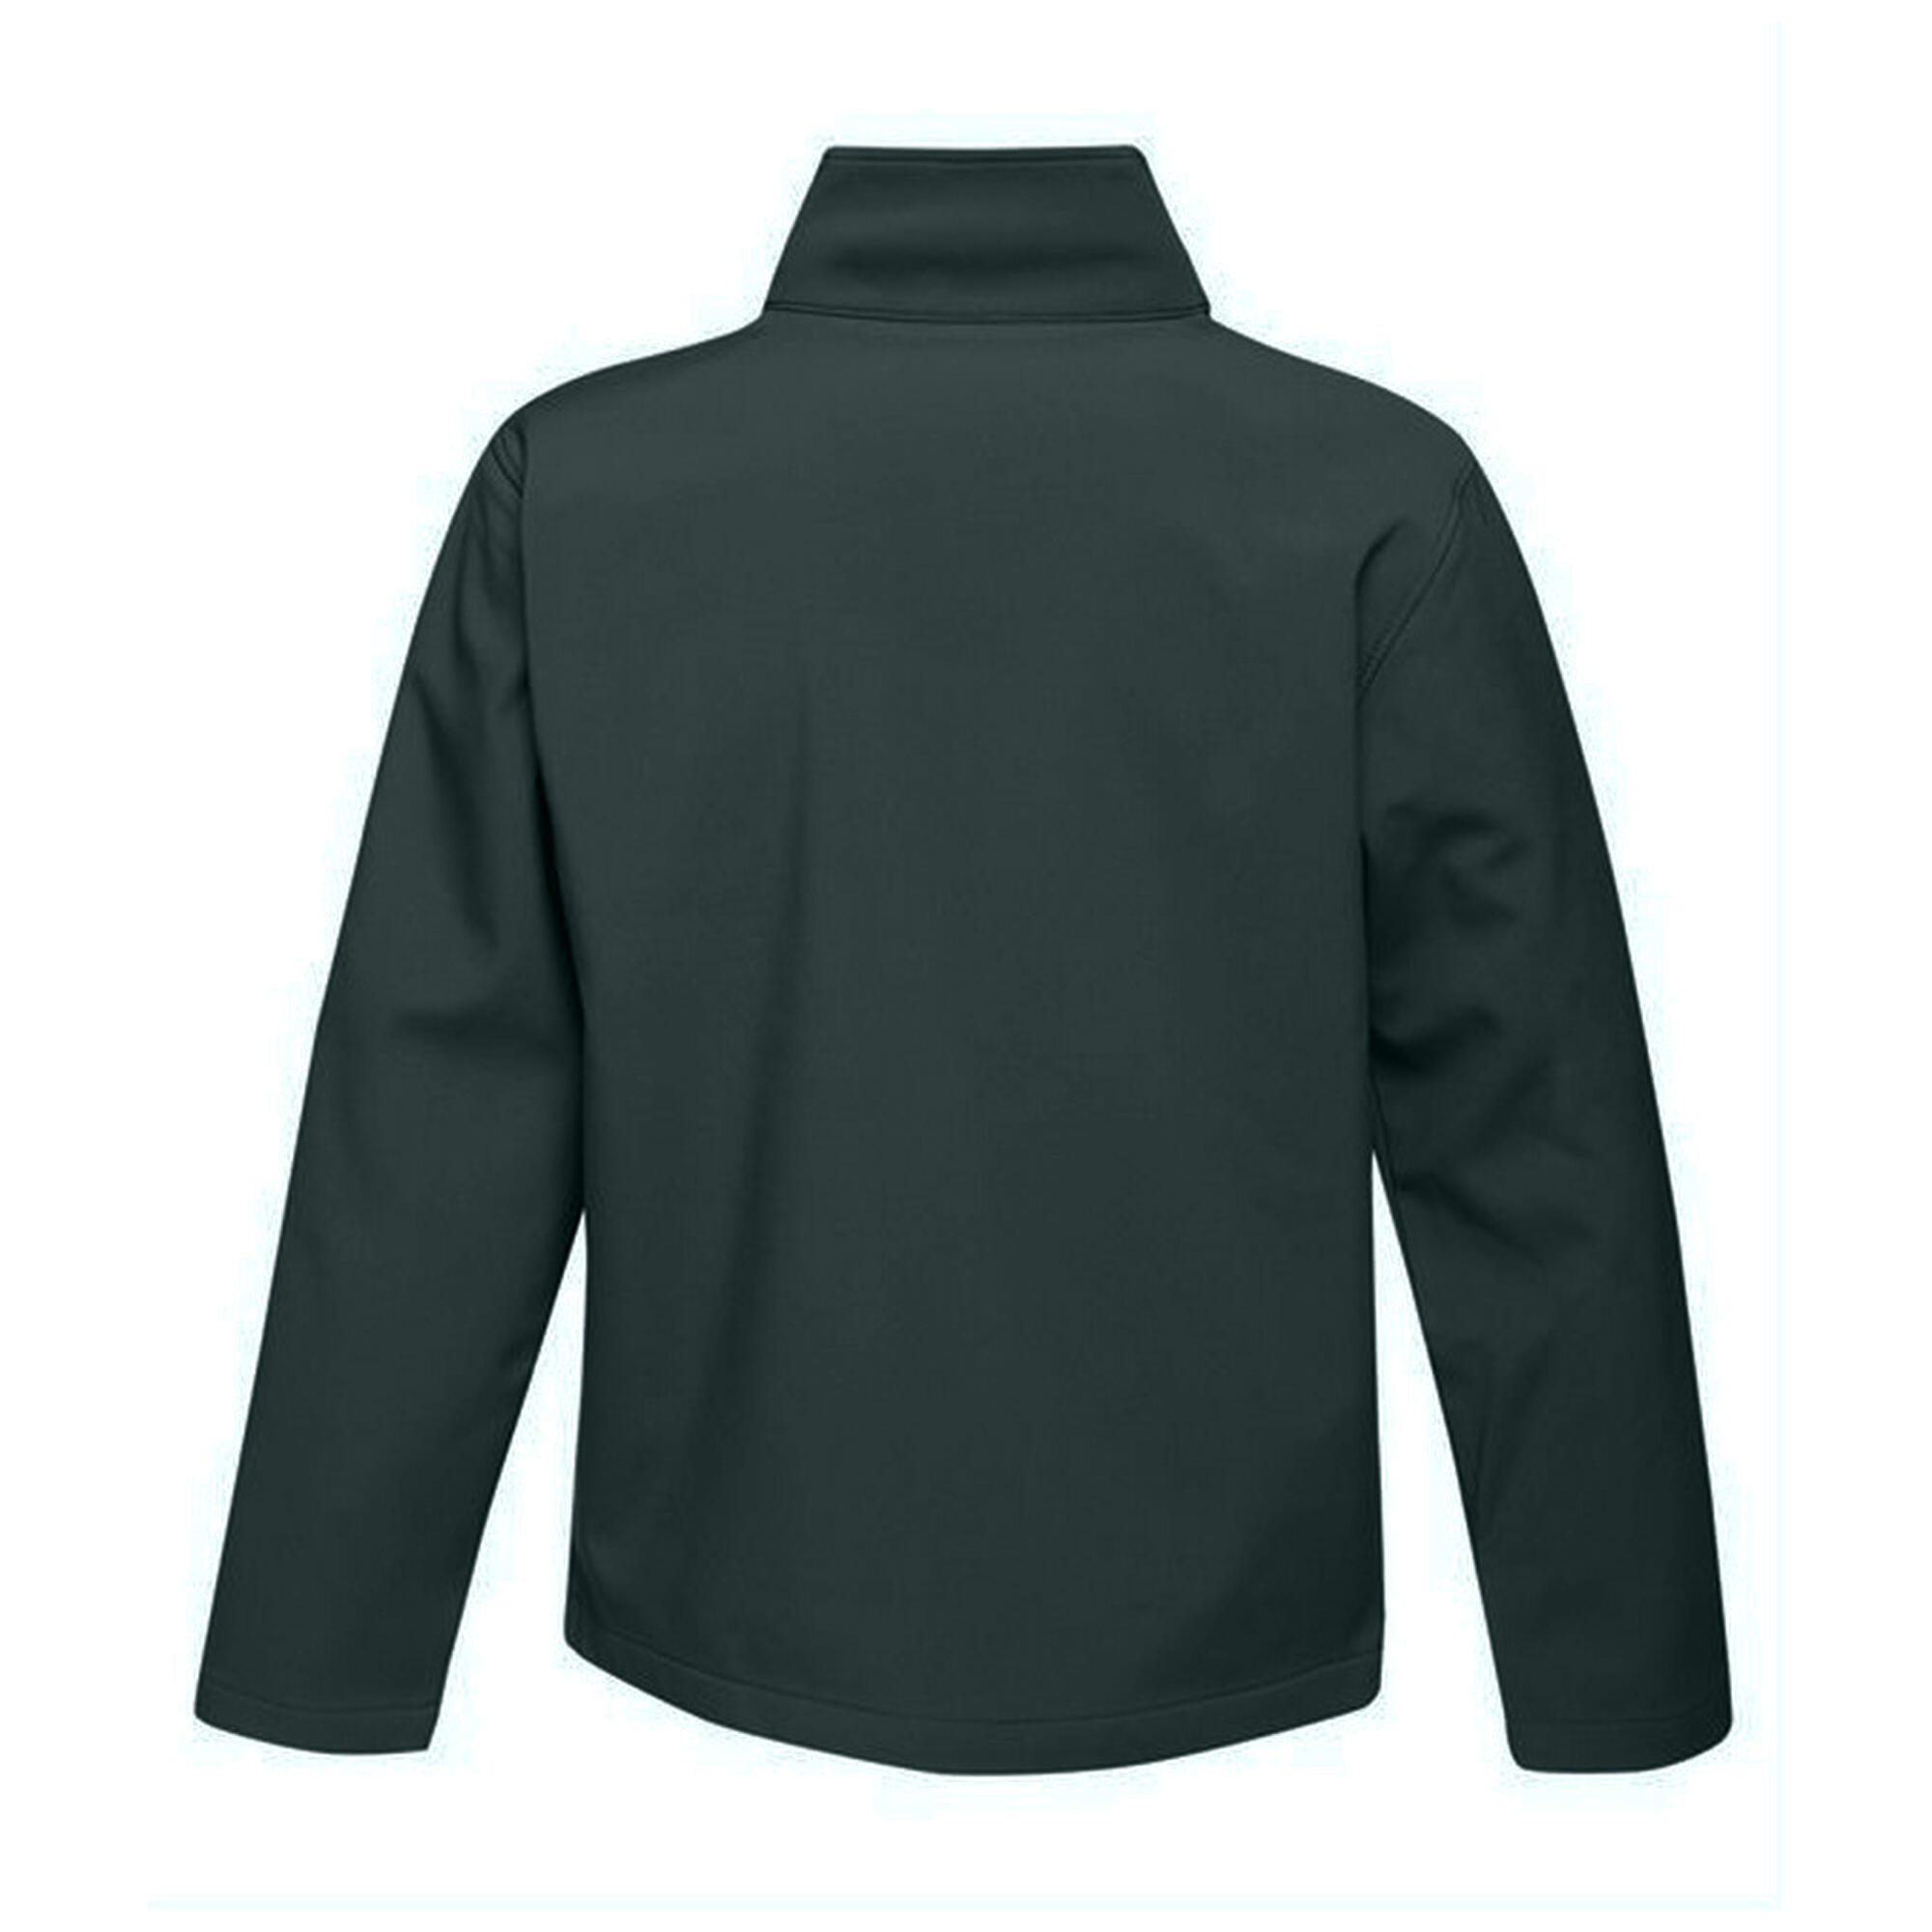 Standout Mens Ablaze Printable Soft Shell Jacket (Dark Spruce/Black) 2/5